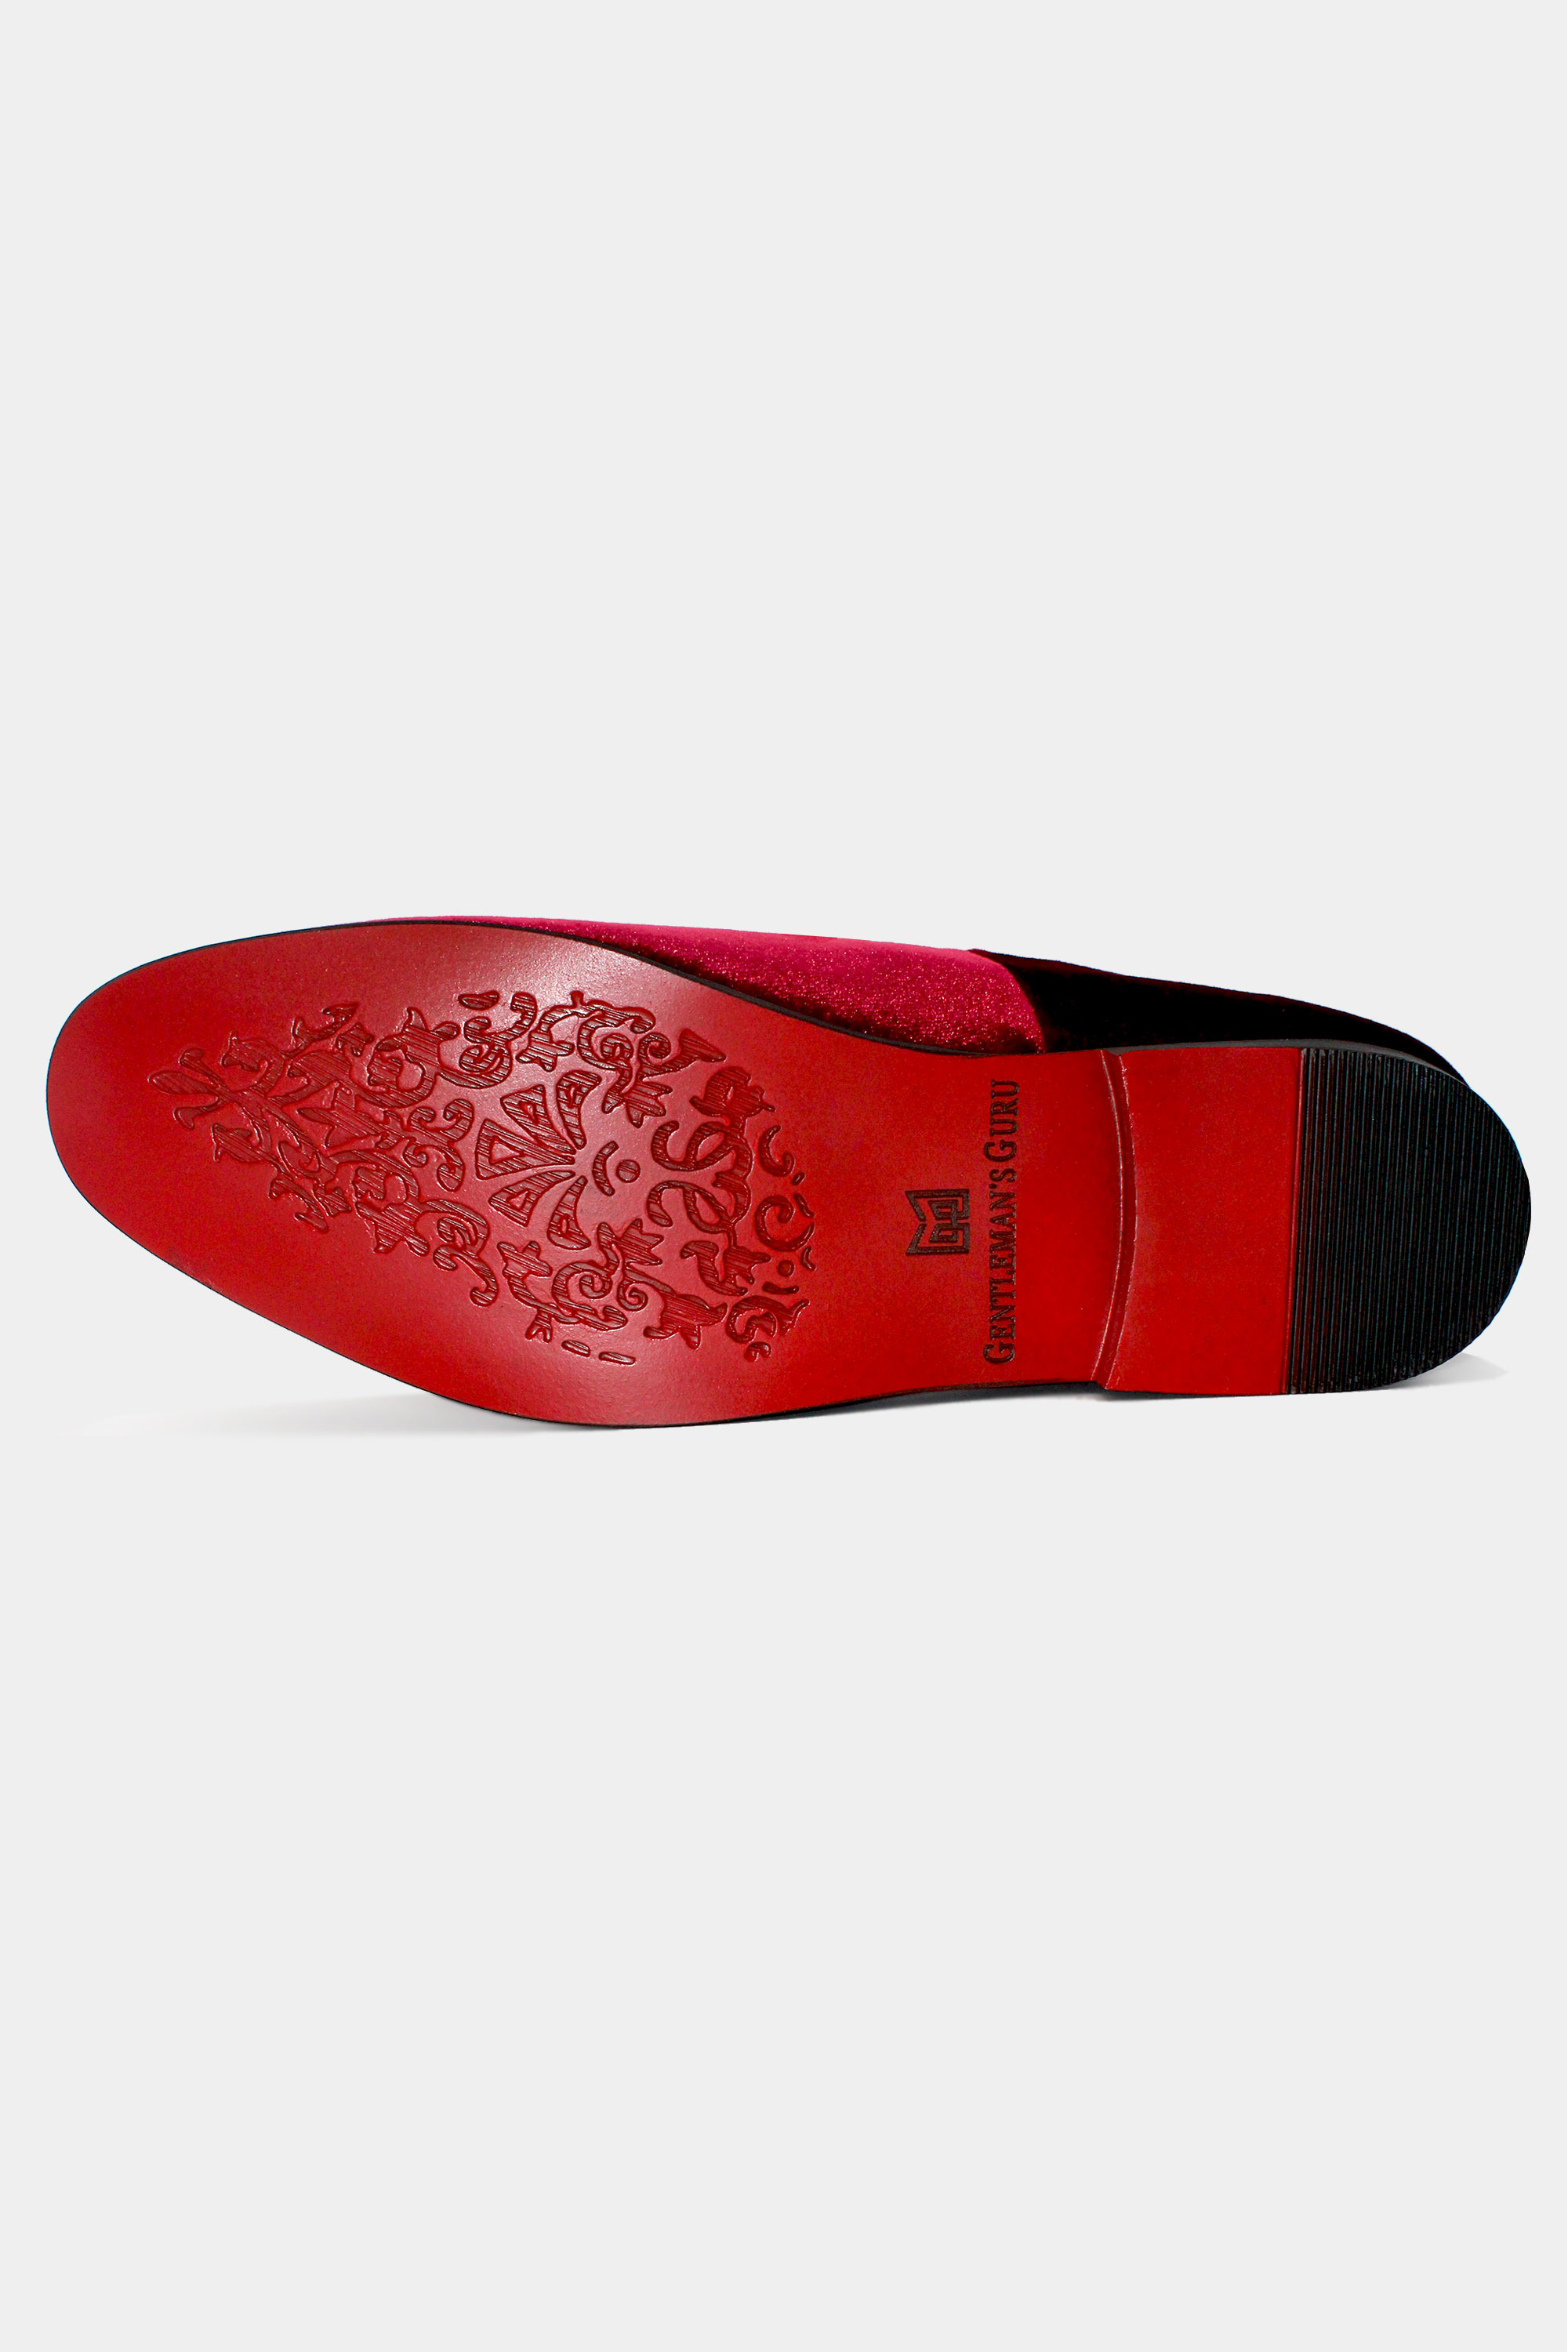 Mens-Red-Velvet-Shoes-Loafer-from-Gentlemansguru.com